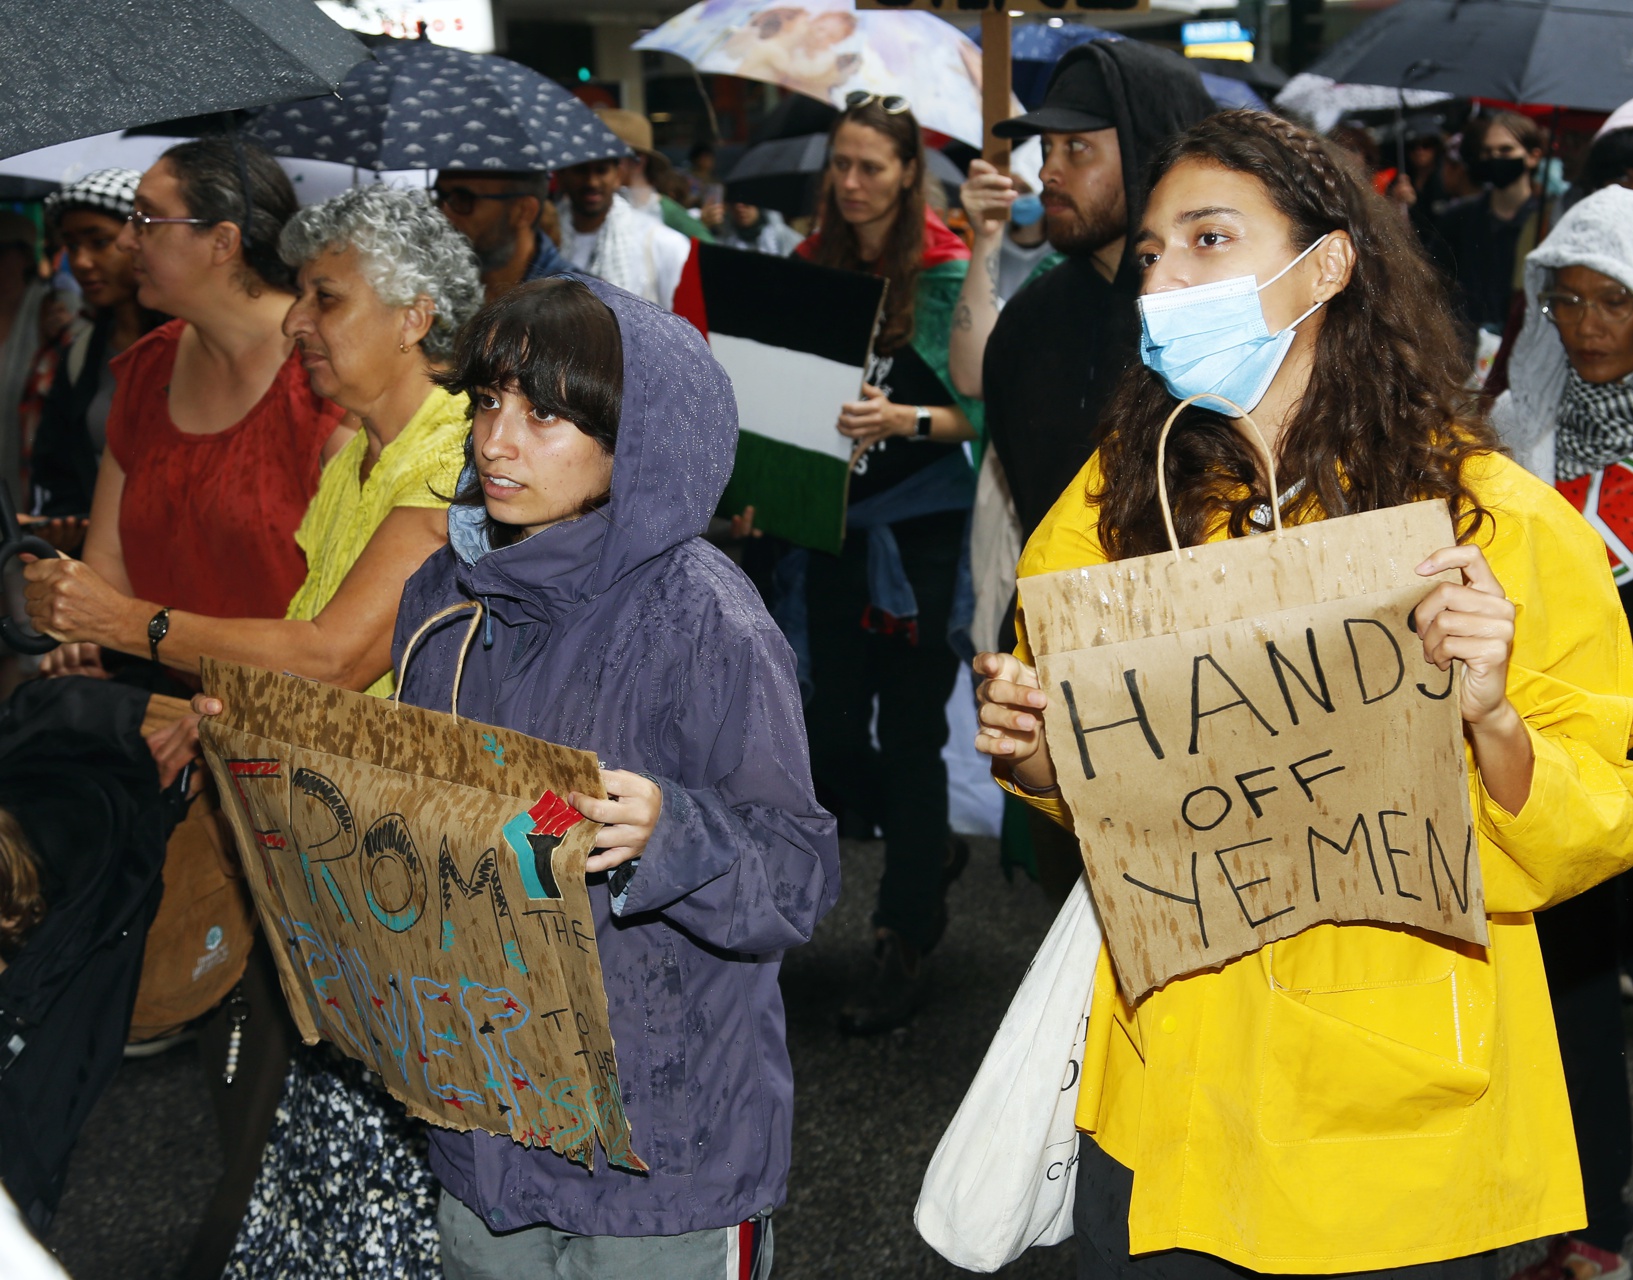 Hands off Yemen, Meanjin/Brisbane, March 24